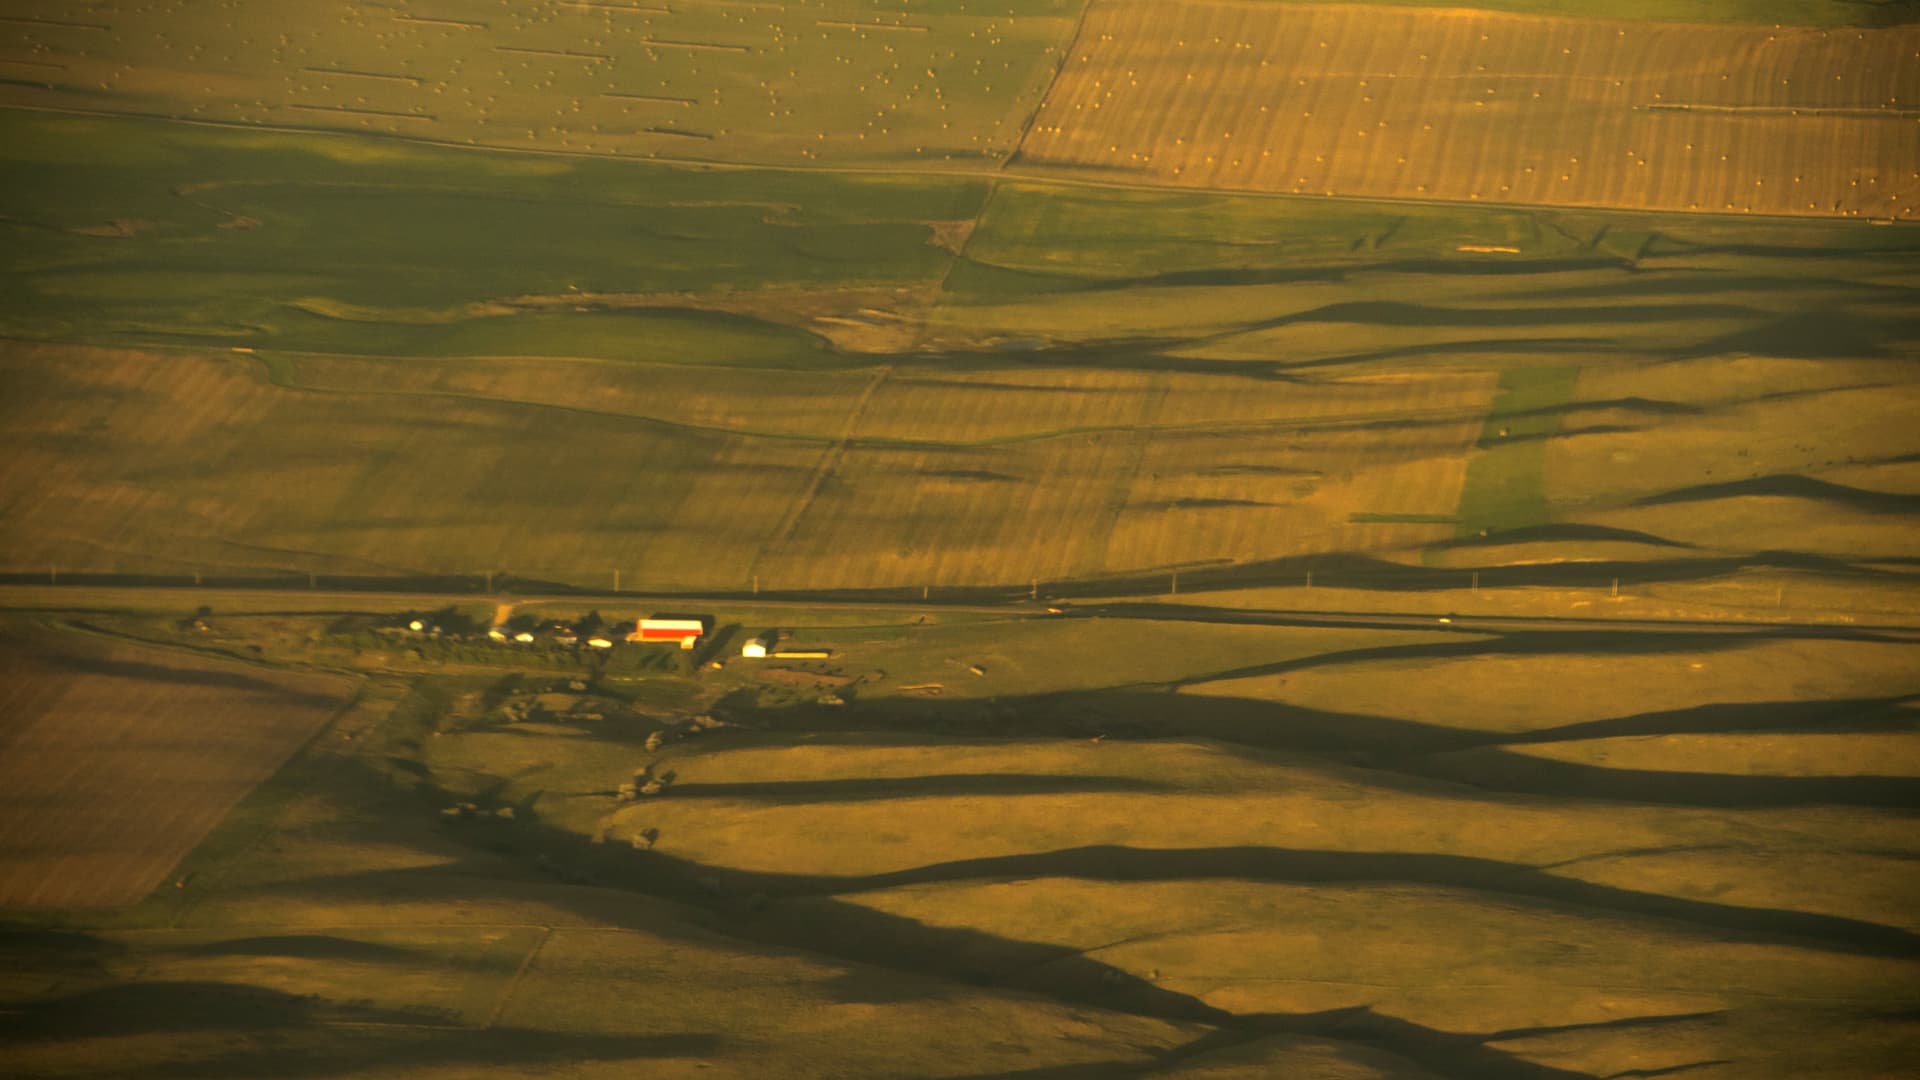 Chinese company's purchase of North Dakota farmland raises national security concerns in Washington